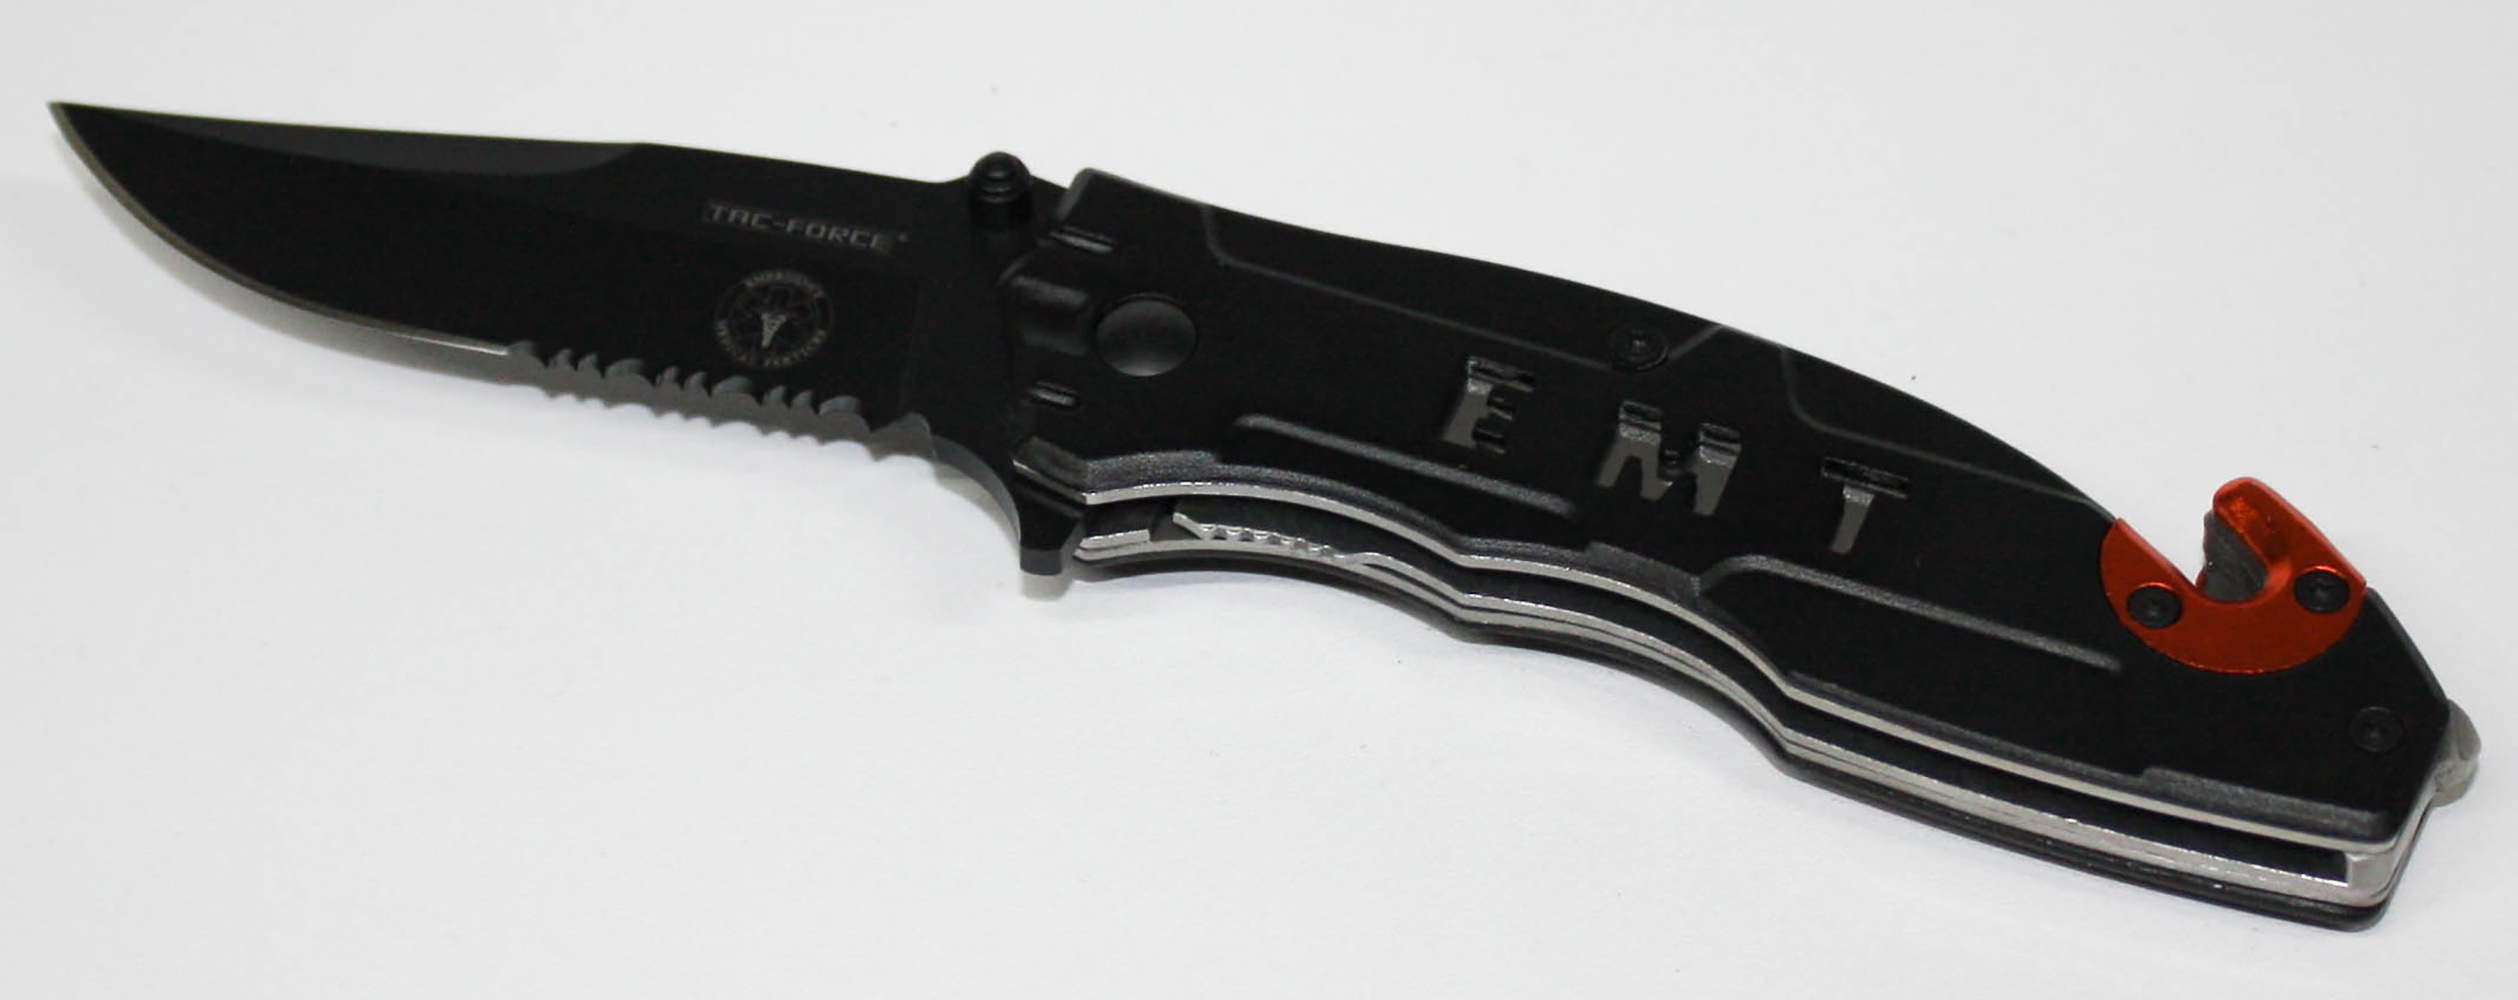 Tac Force Outdoormesser Klappmesser Taschenmesser Messer EMT, TF-525EM